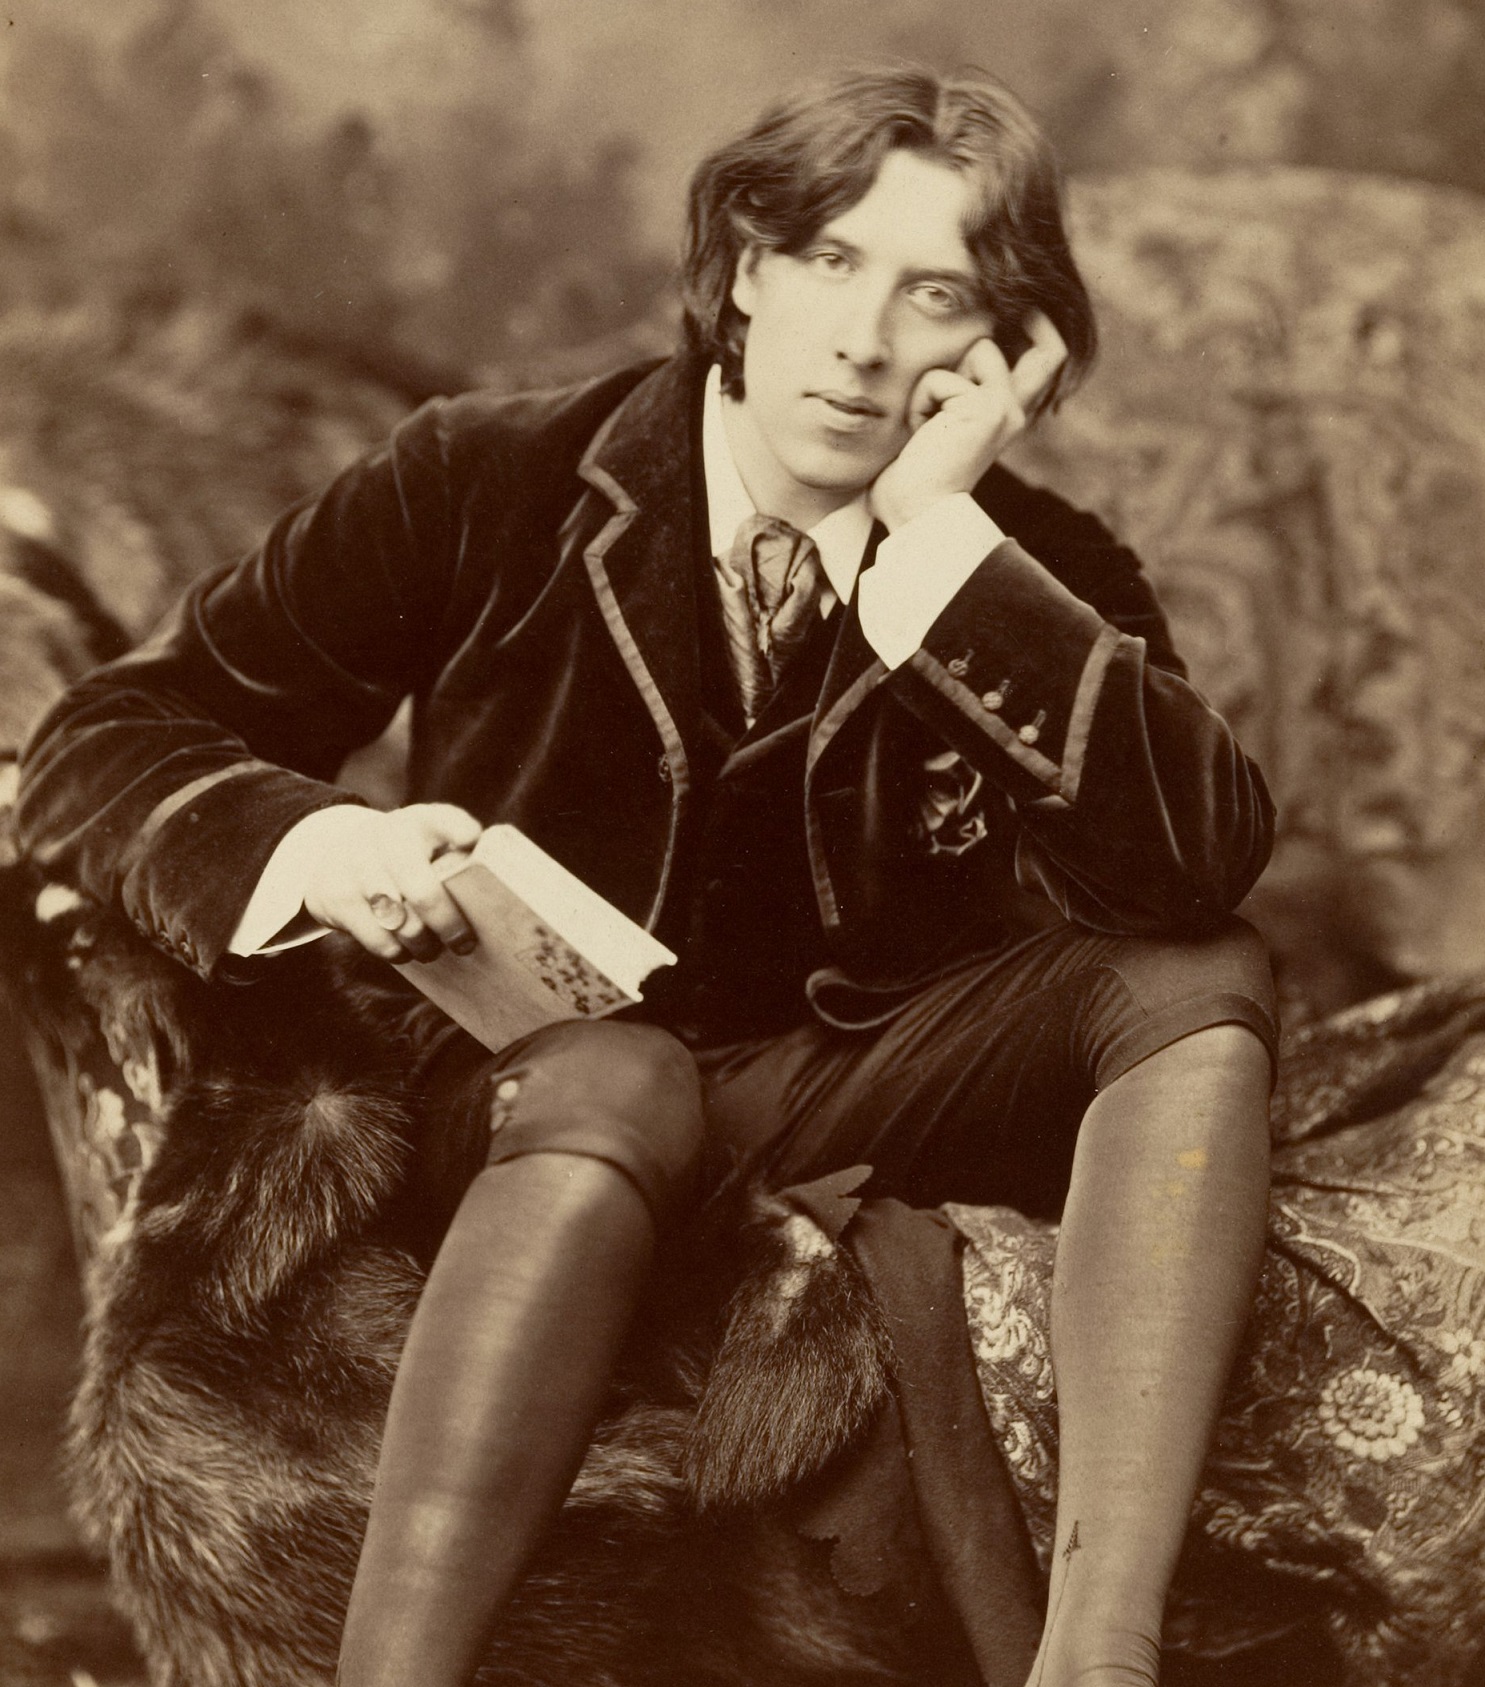 Исповедь уайльда. Оскар Уайльд. Оскар Уайльд (Oscar Wilde). Оскар Уайльд в молодости. Оскар Уайльд в Оксфорде.